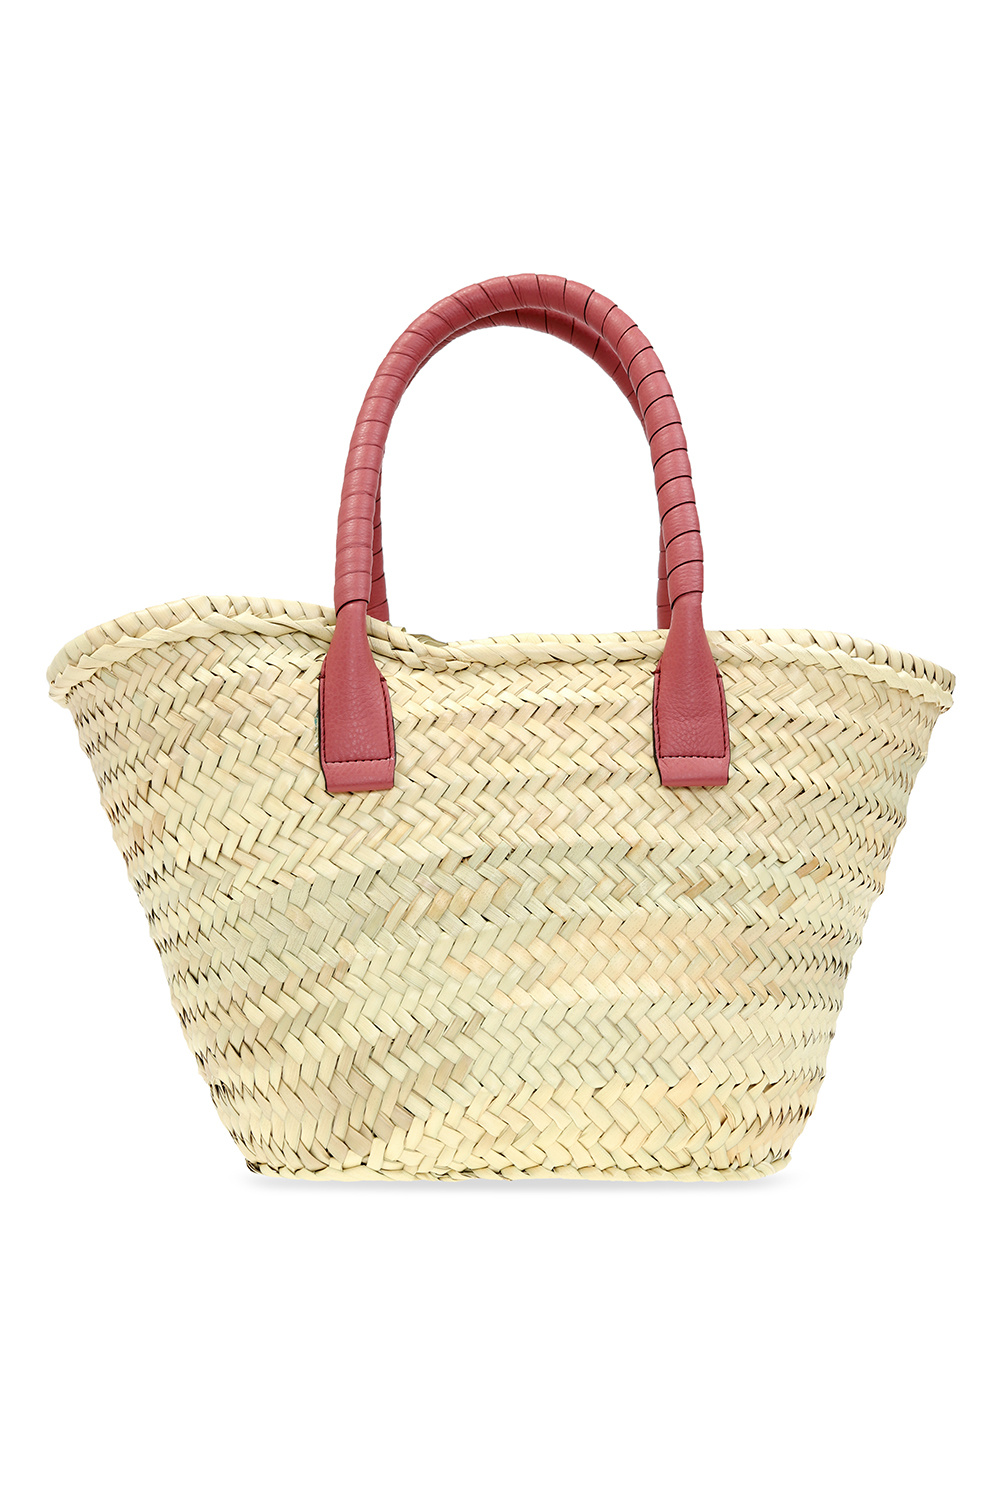 Chloé ‘Marcie’ shopper bag